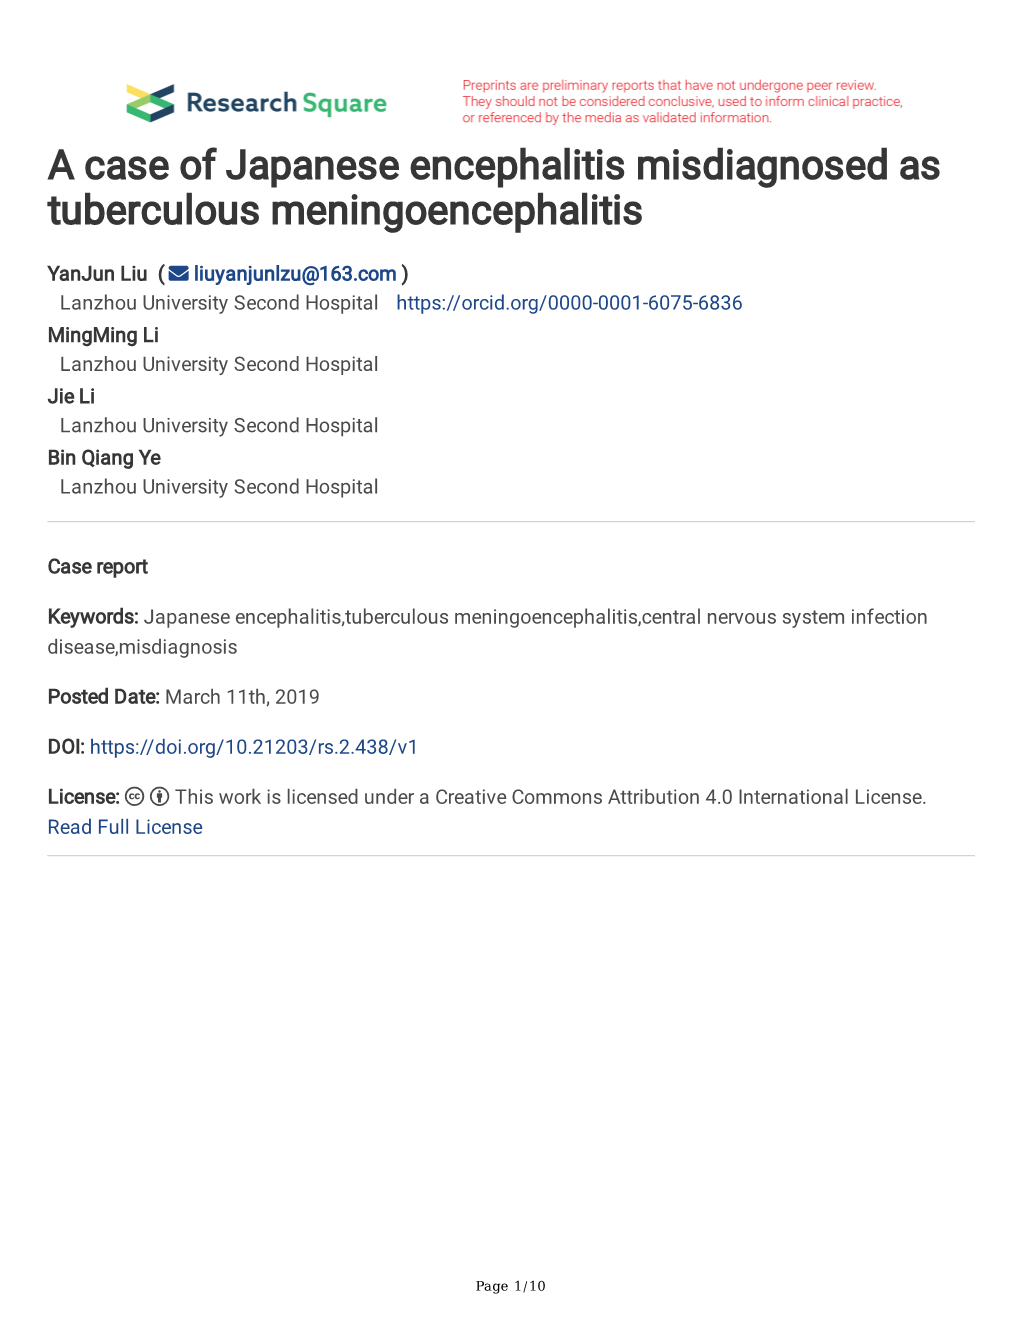 A Case of Japanese Encephalitis Misdiagnosed As Tuberculous Meningoencephalitis